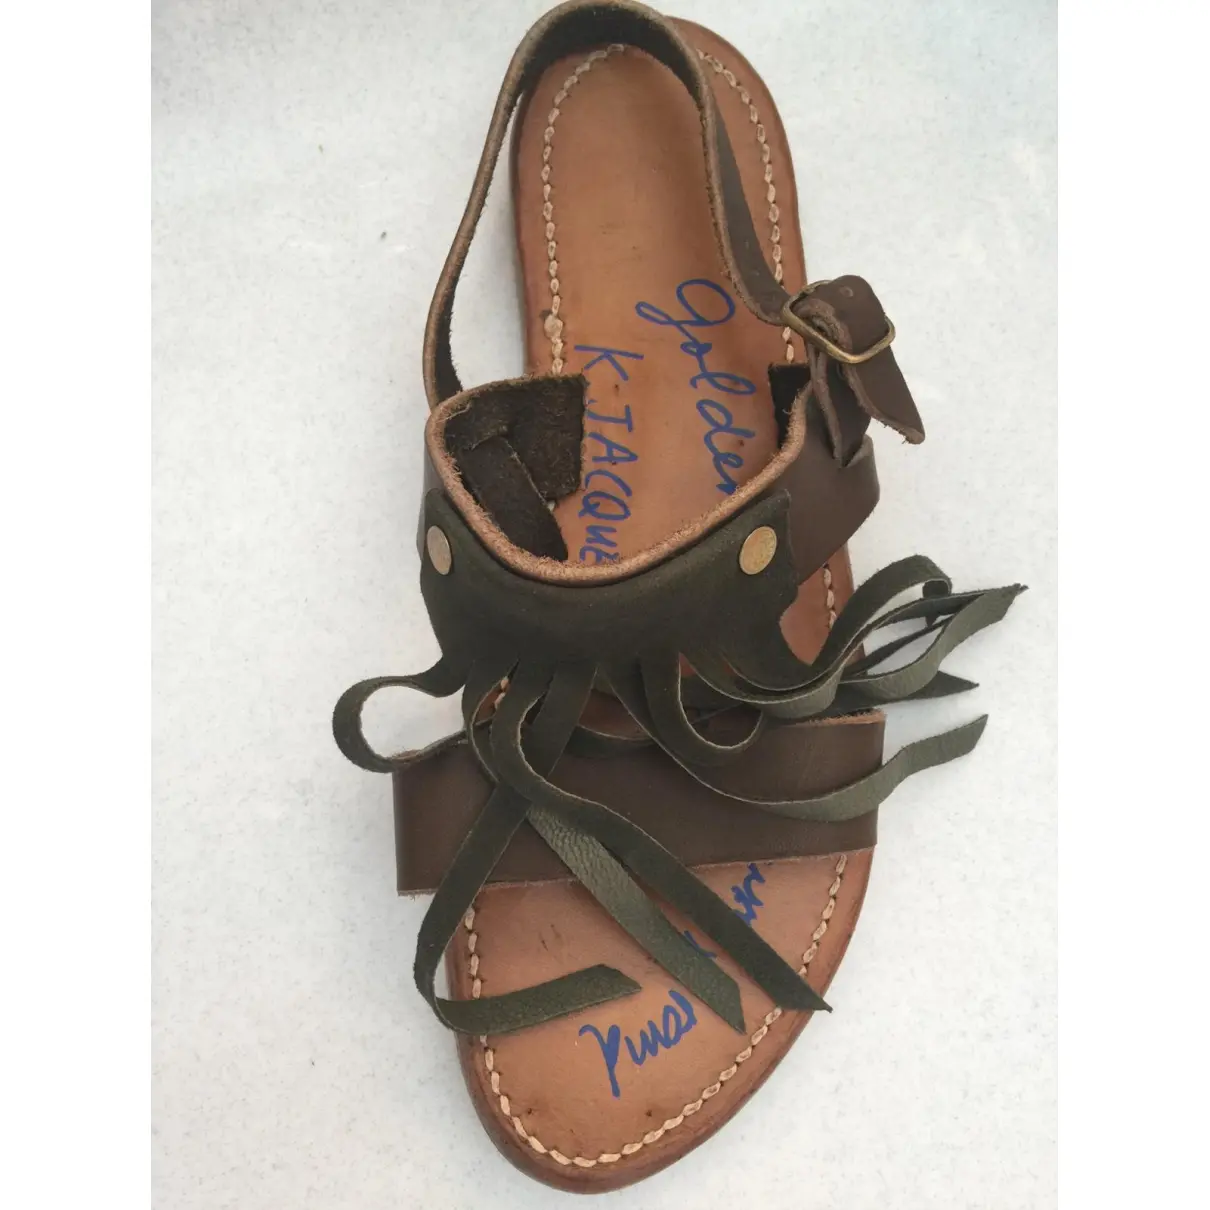 Buy Golden Goose Brown Leather Sandals online